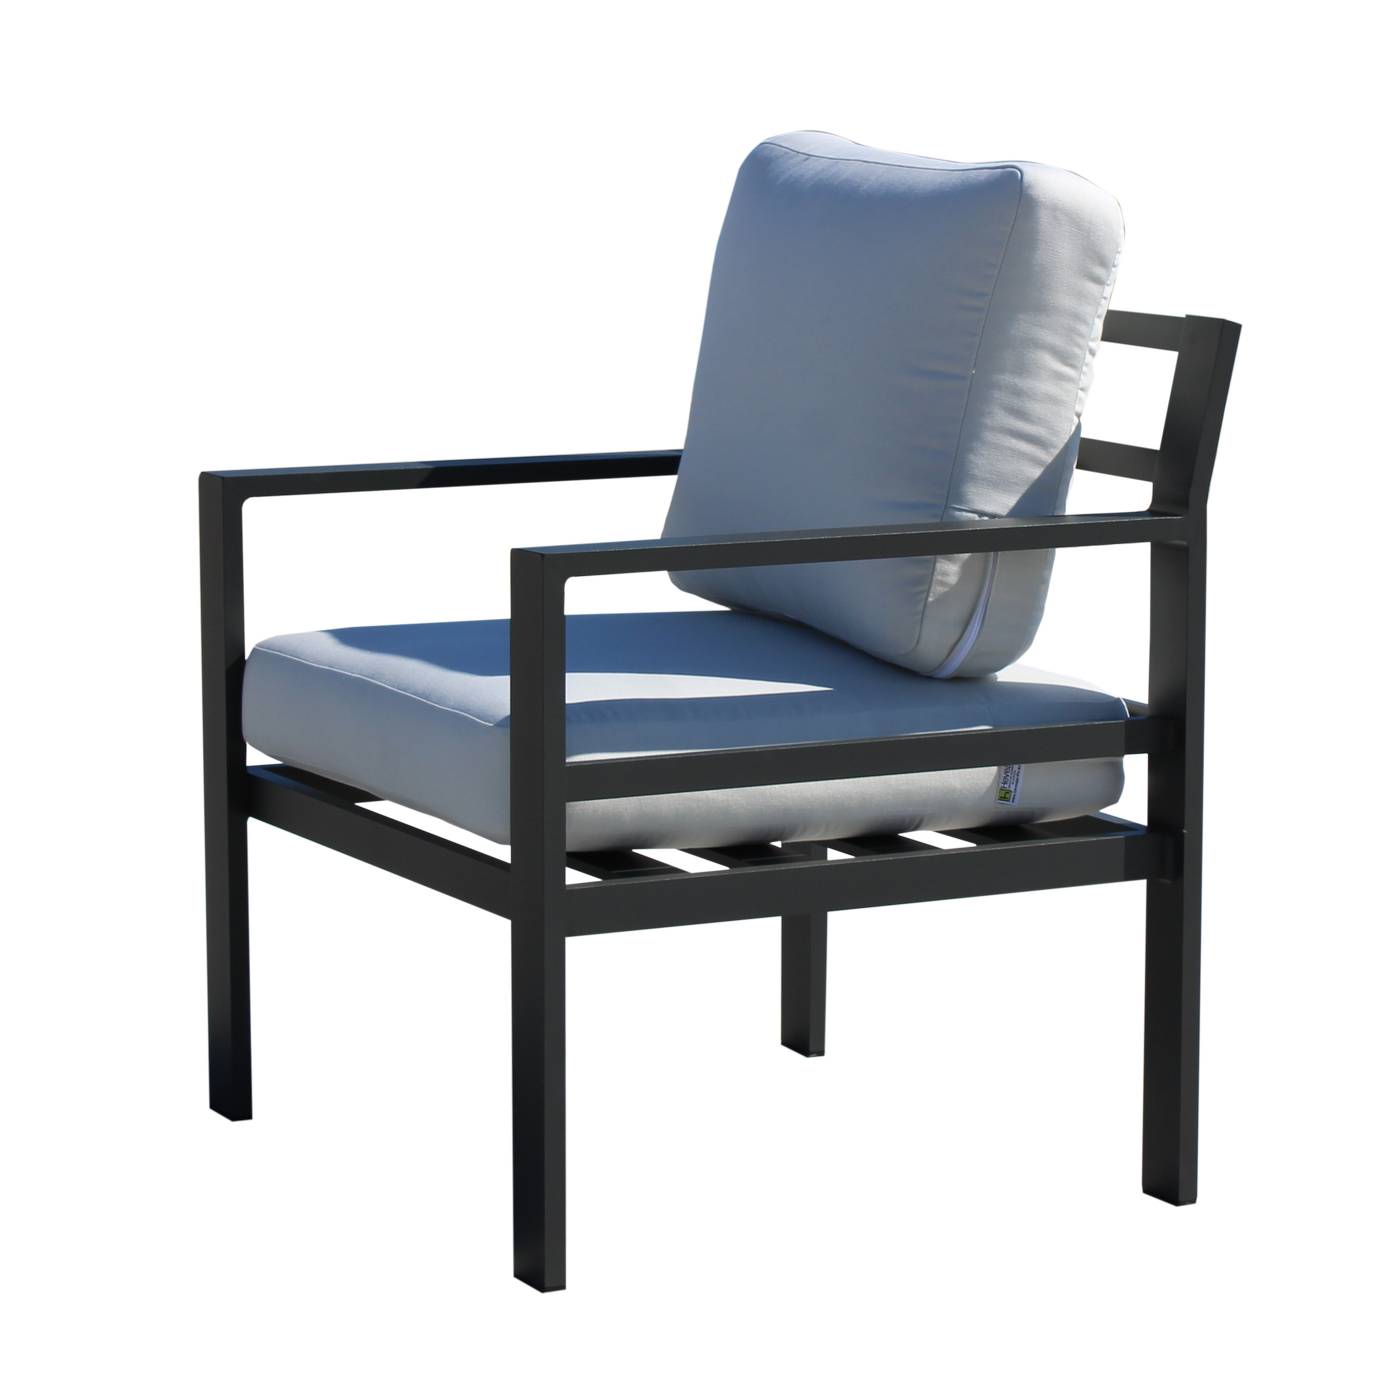 Set Aluminio Luxe Glembor-7 - Conjunto aluminio: 1 sofá 2 plazas + 2 sillones + 1 mesa de centro. Disponible en color blanco o antracita.